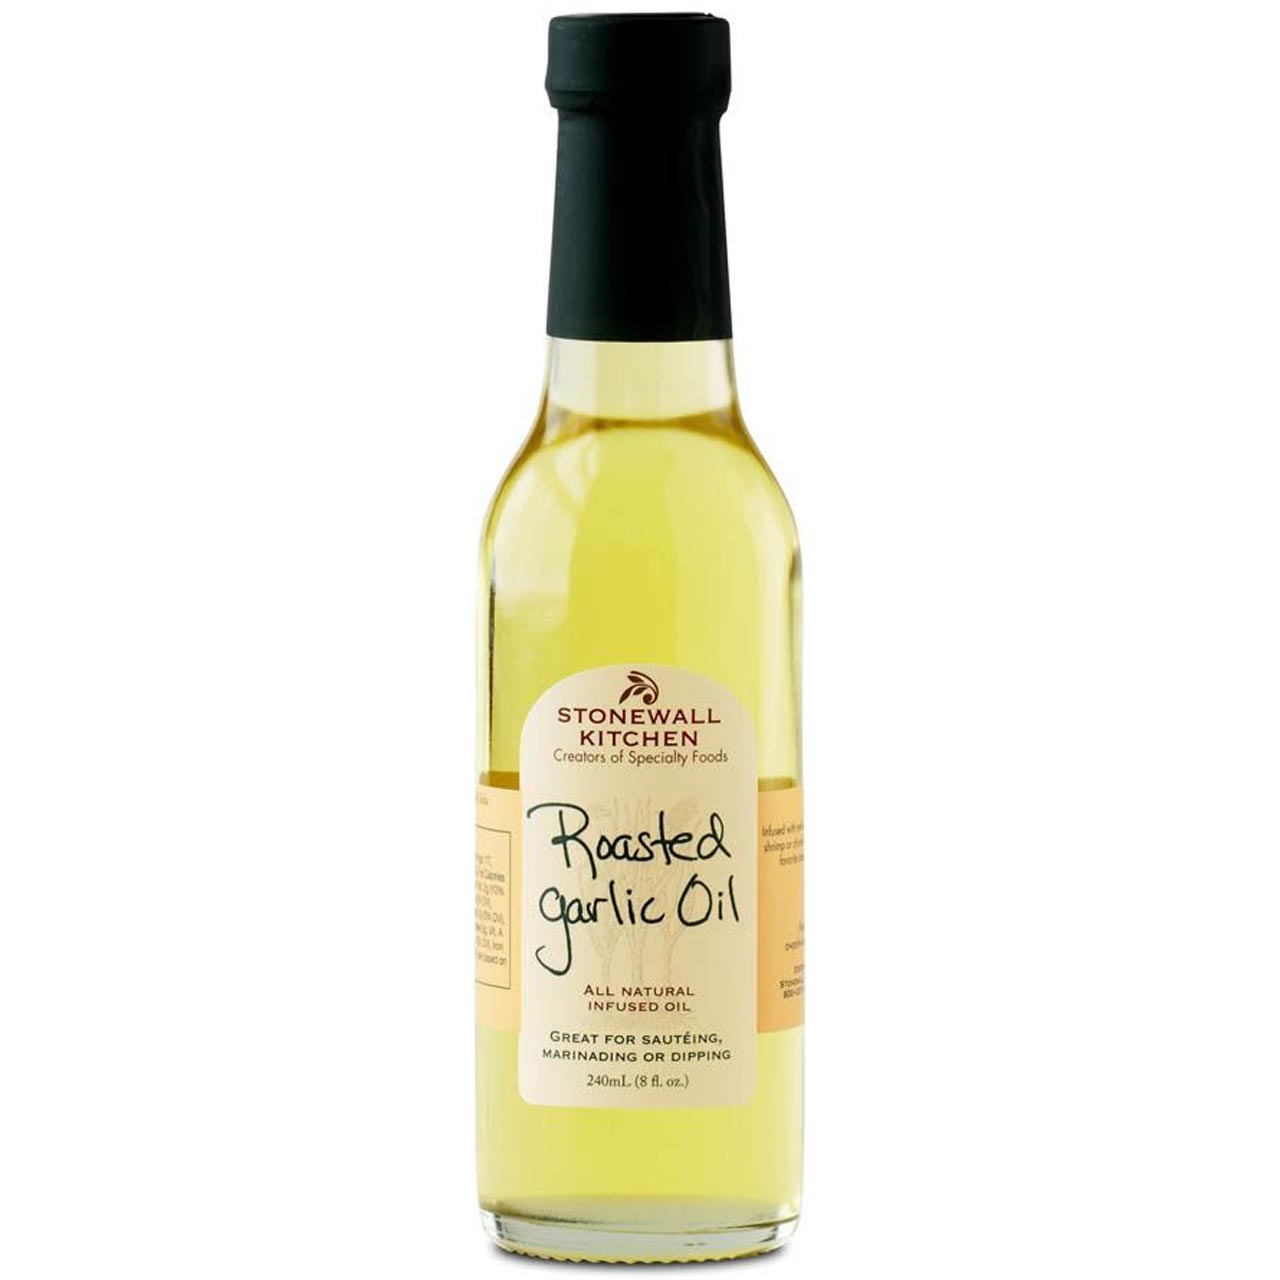 Stonewall Kitchen - Roasted Garlic Oil